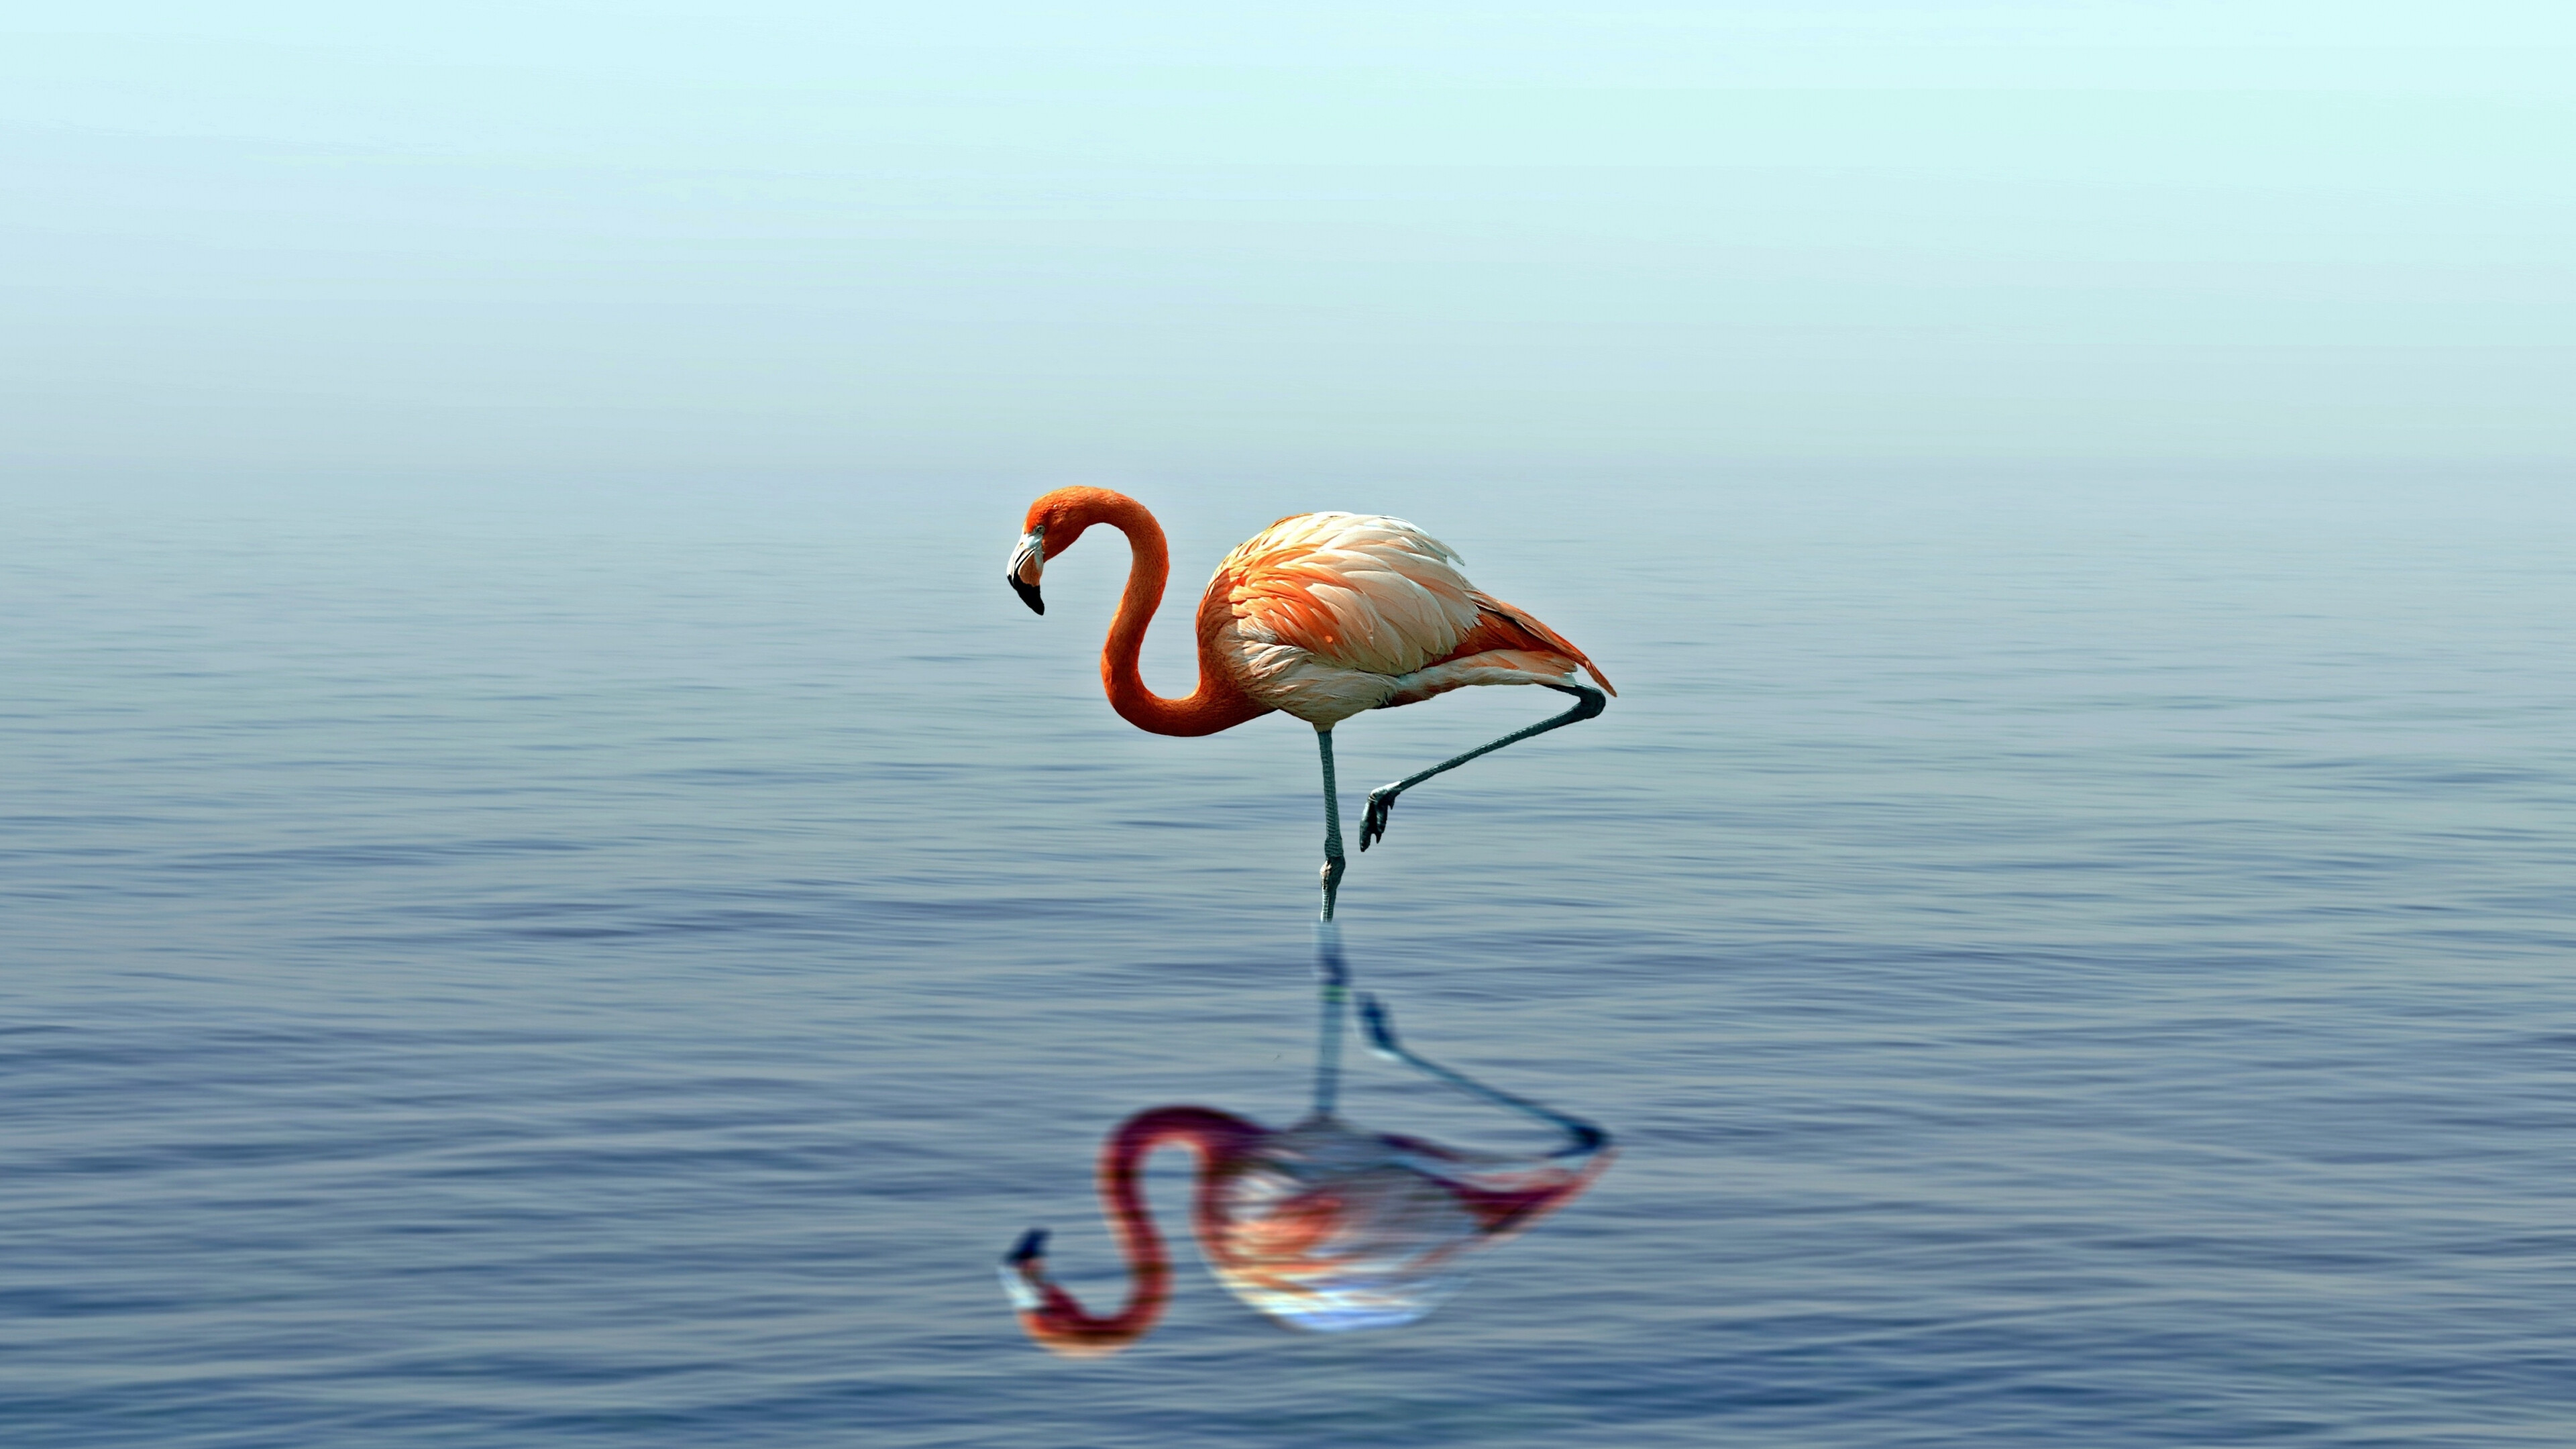 Flamingo: A pink wading bird that has incredibly long legs. 3840x2160 4K Wallpaper.